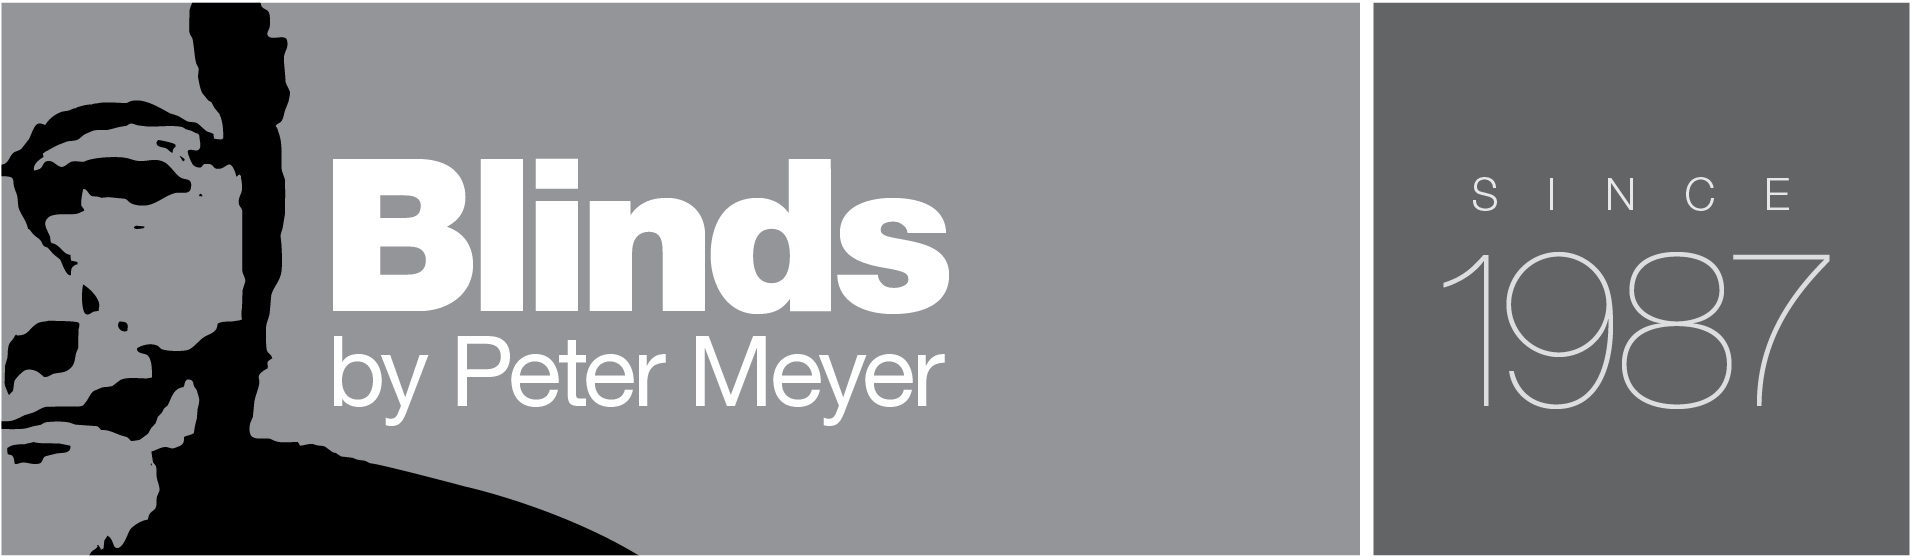 Peter Meyer Blinds logo